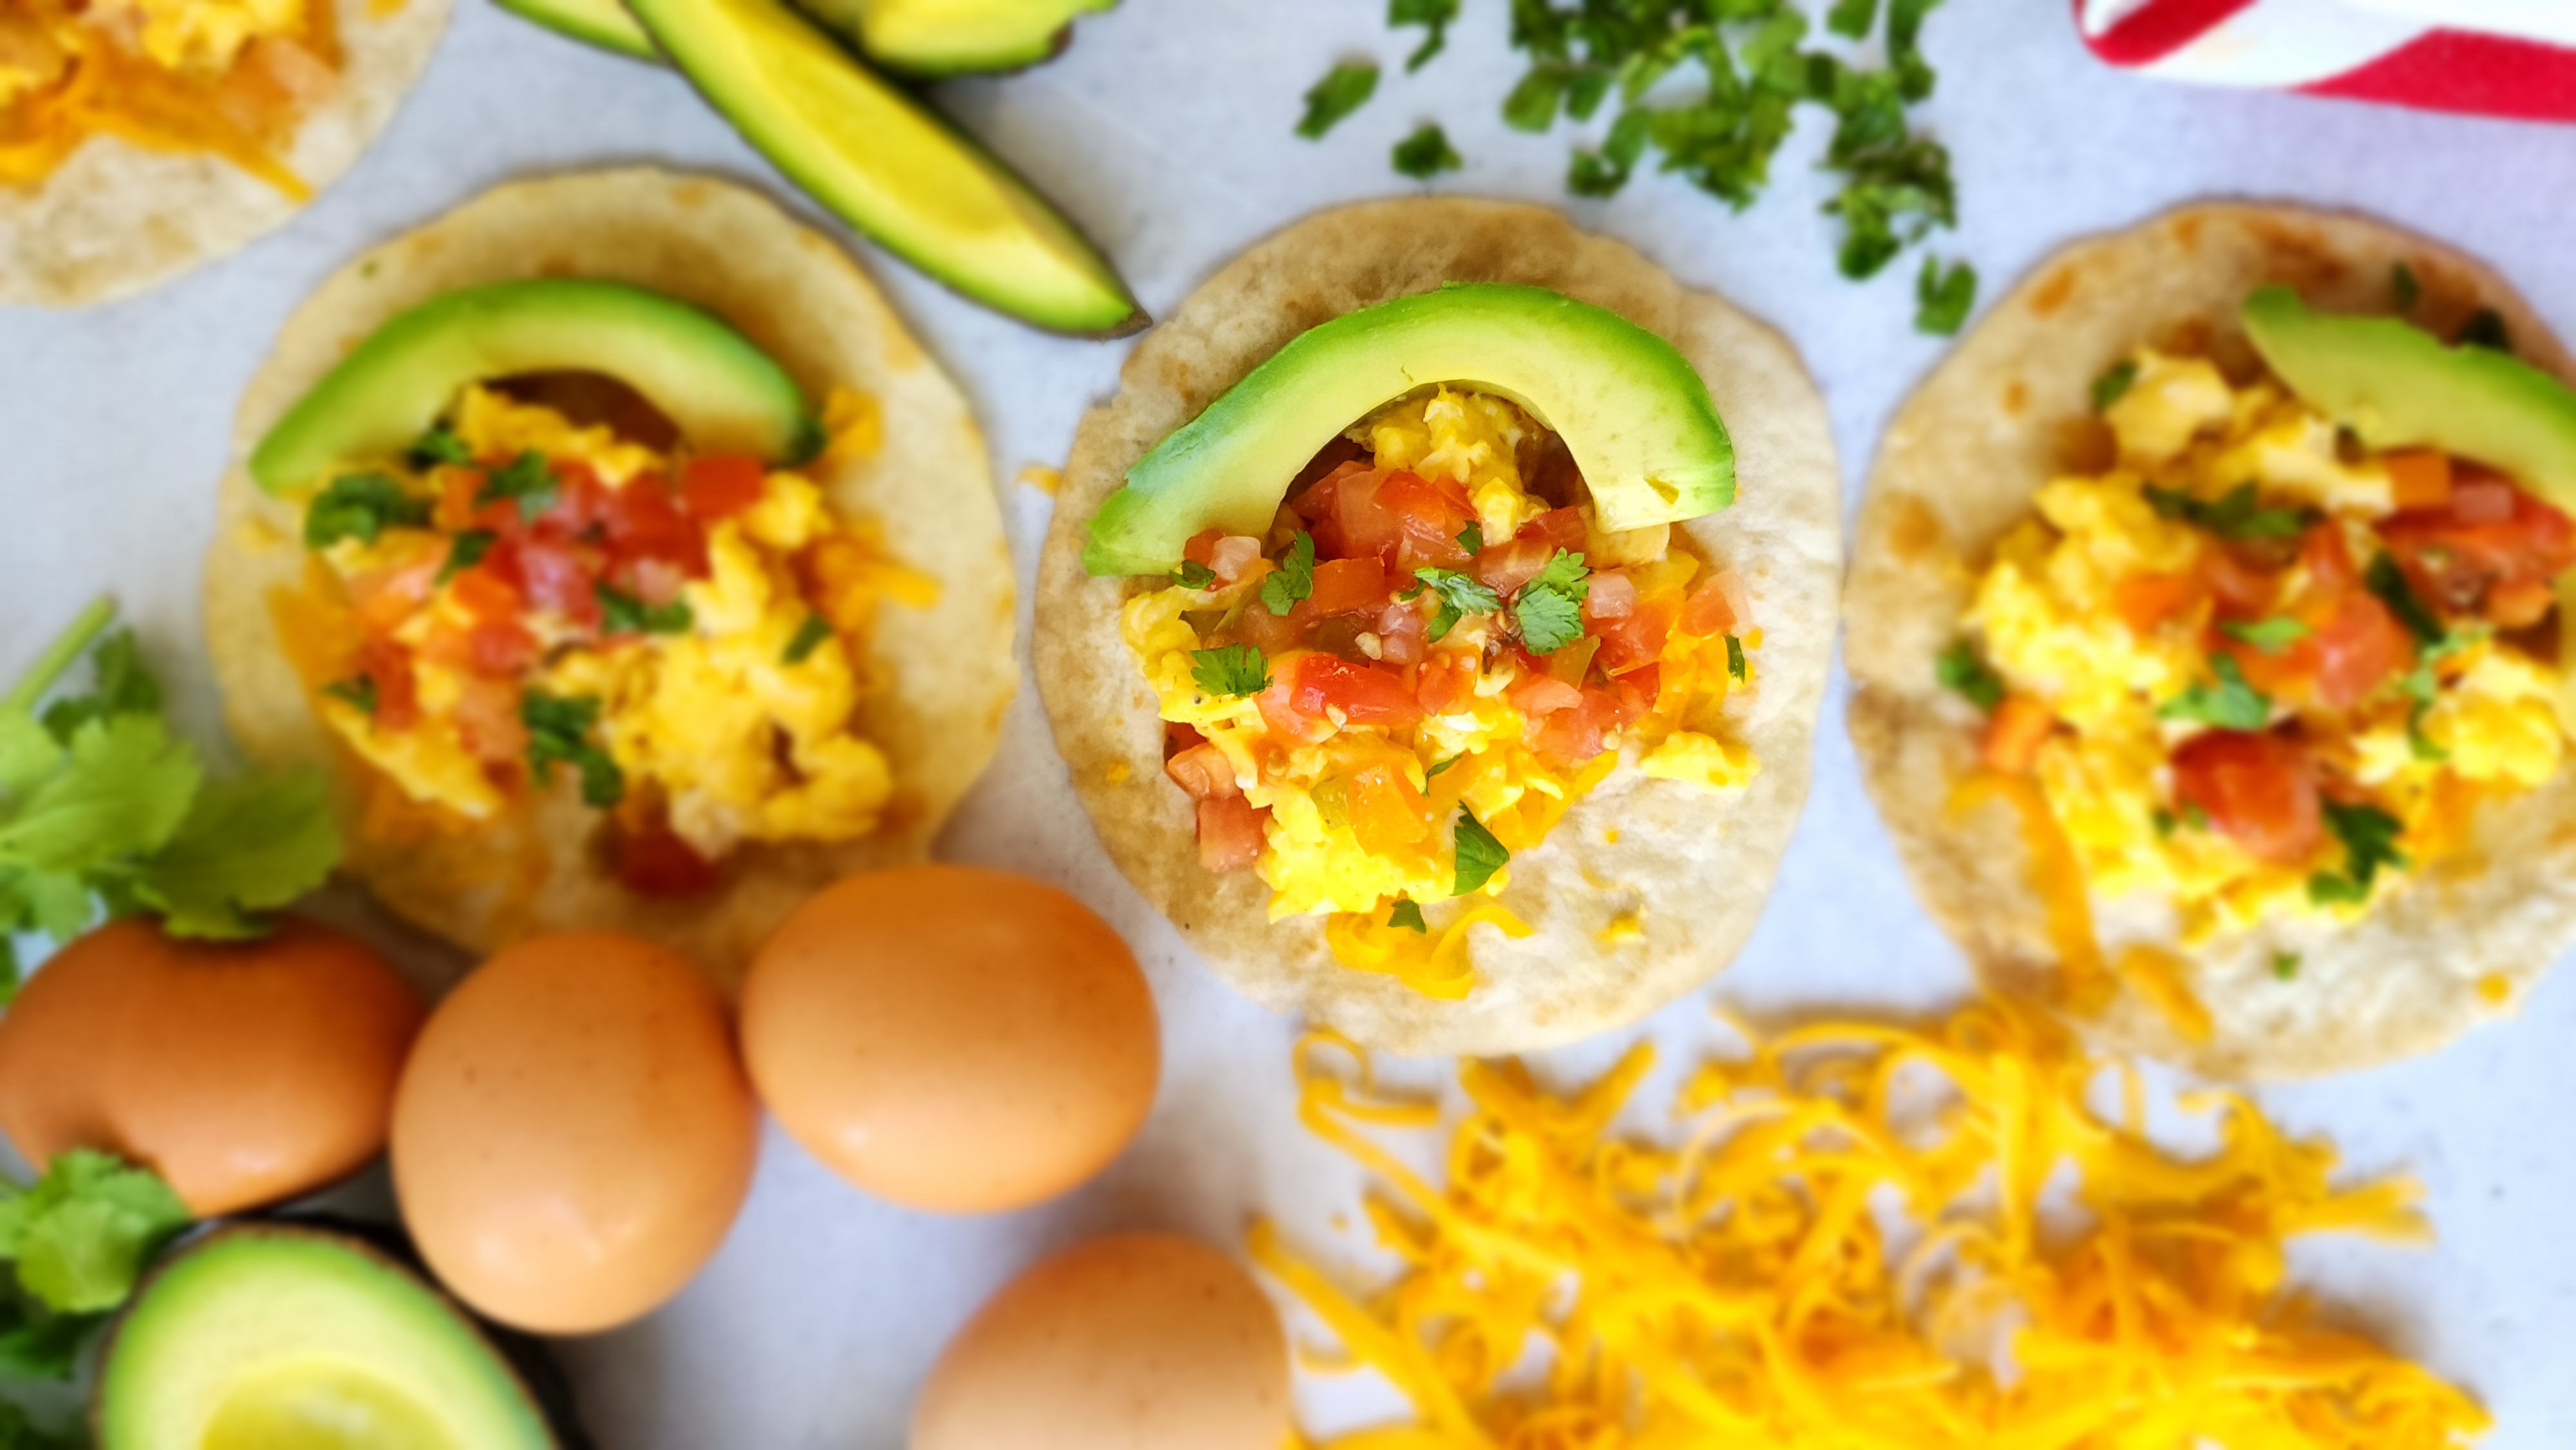 Breakfast Tacos with eggs, cheese, pico de gallo avocado, and cilantro